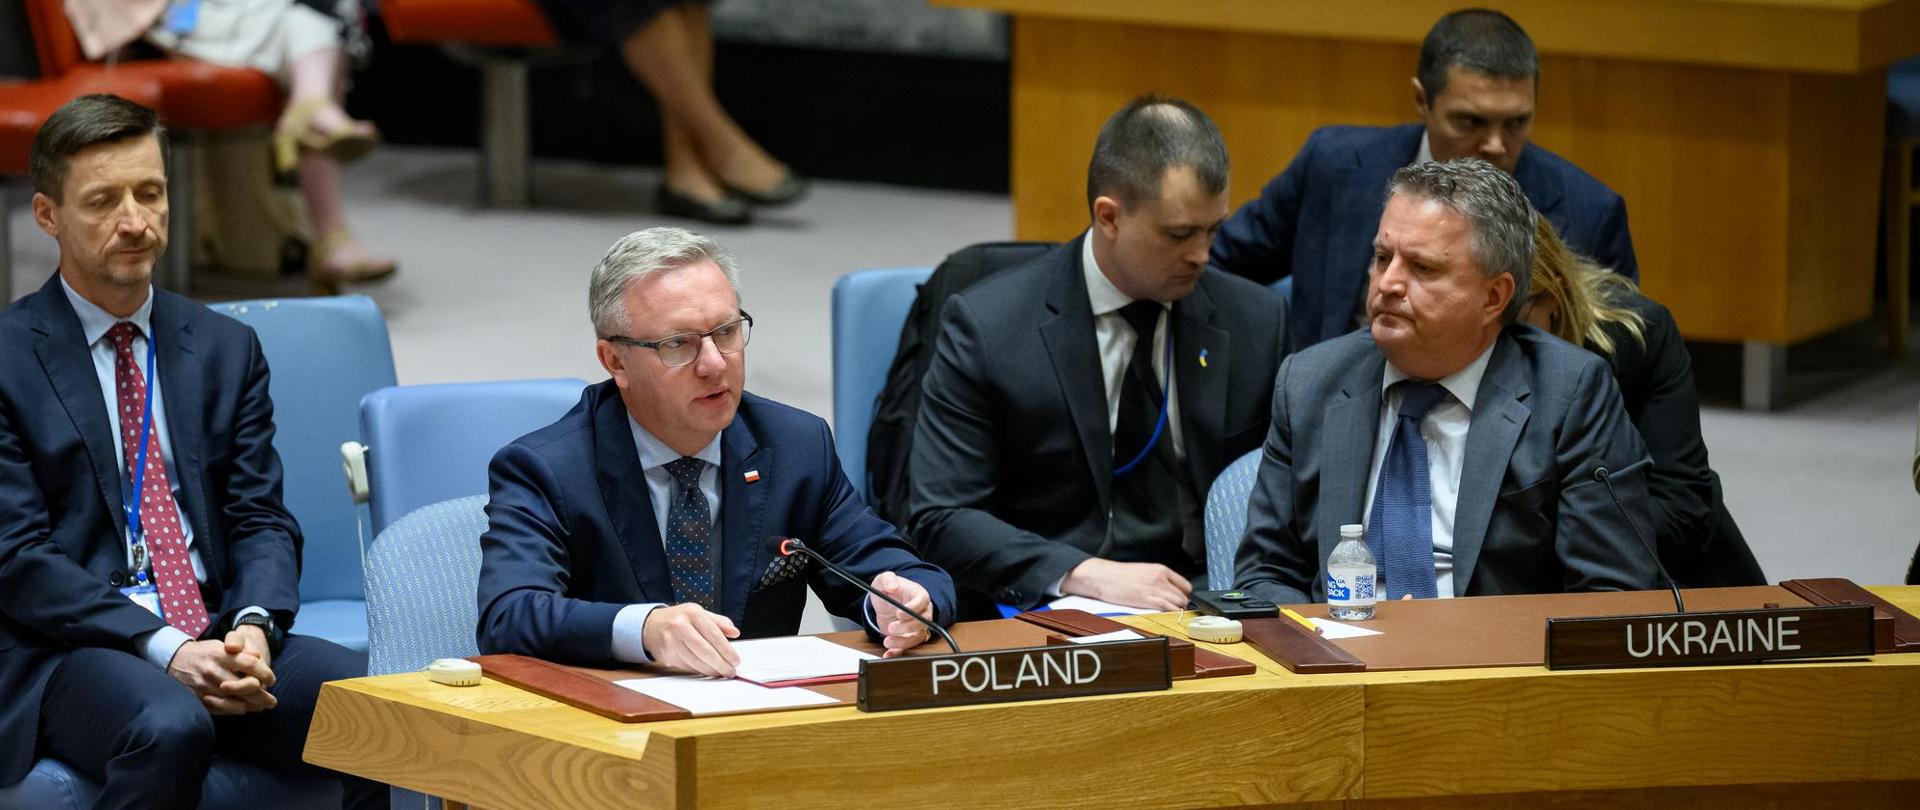 Ambassador Krzysztof Szczerski in the UN Security Council